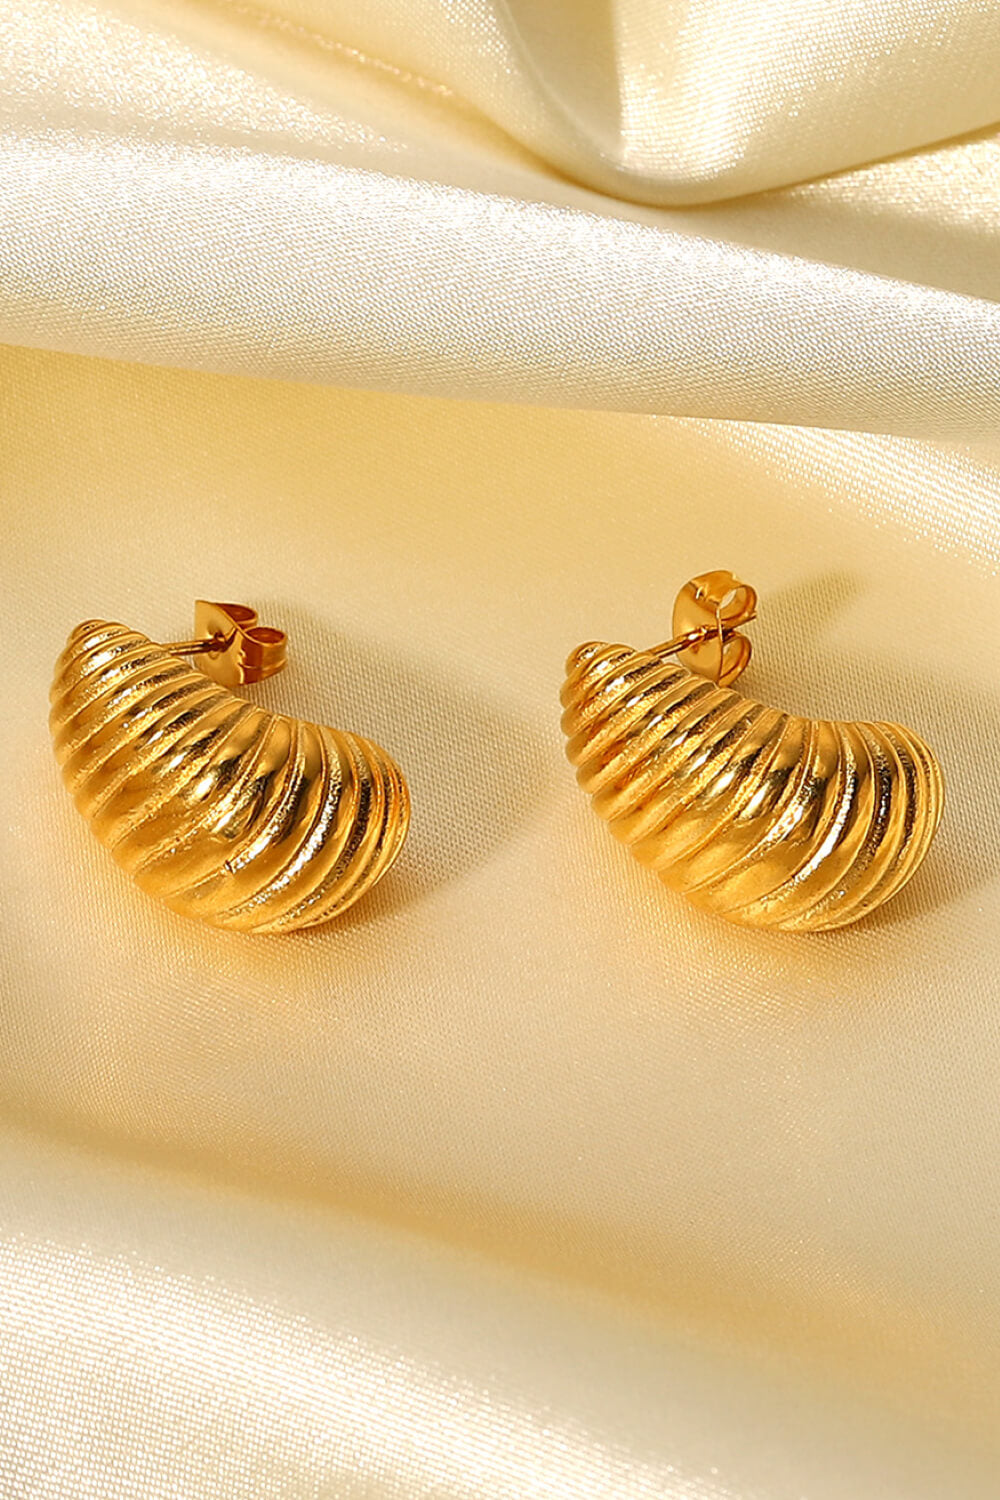 Shell Shore Spiral Stud Earrings - Tigbul's Variety Fashion Shop